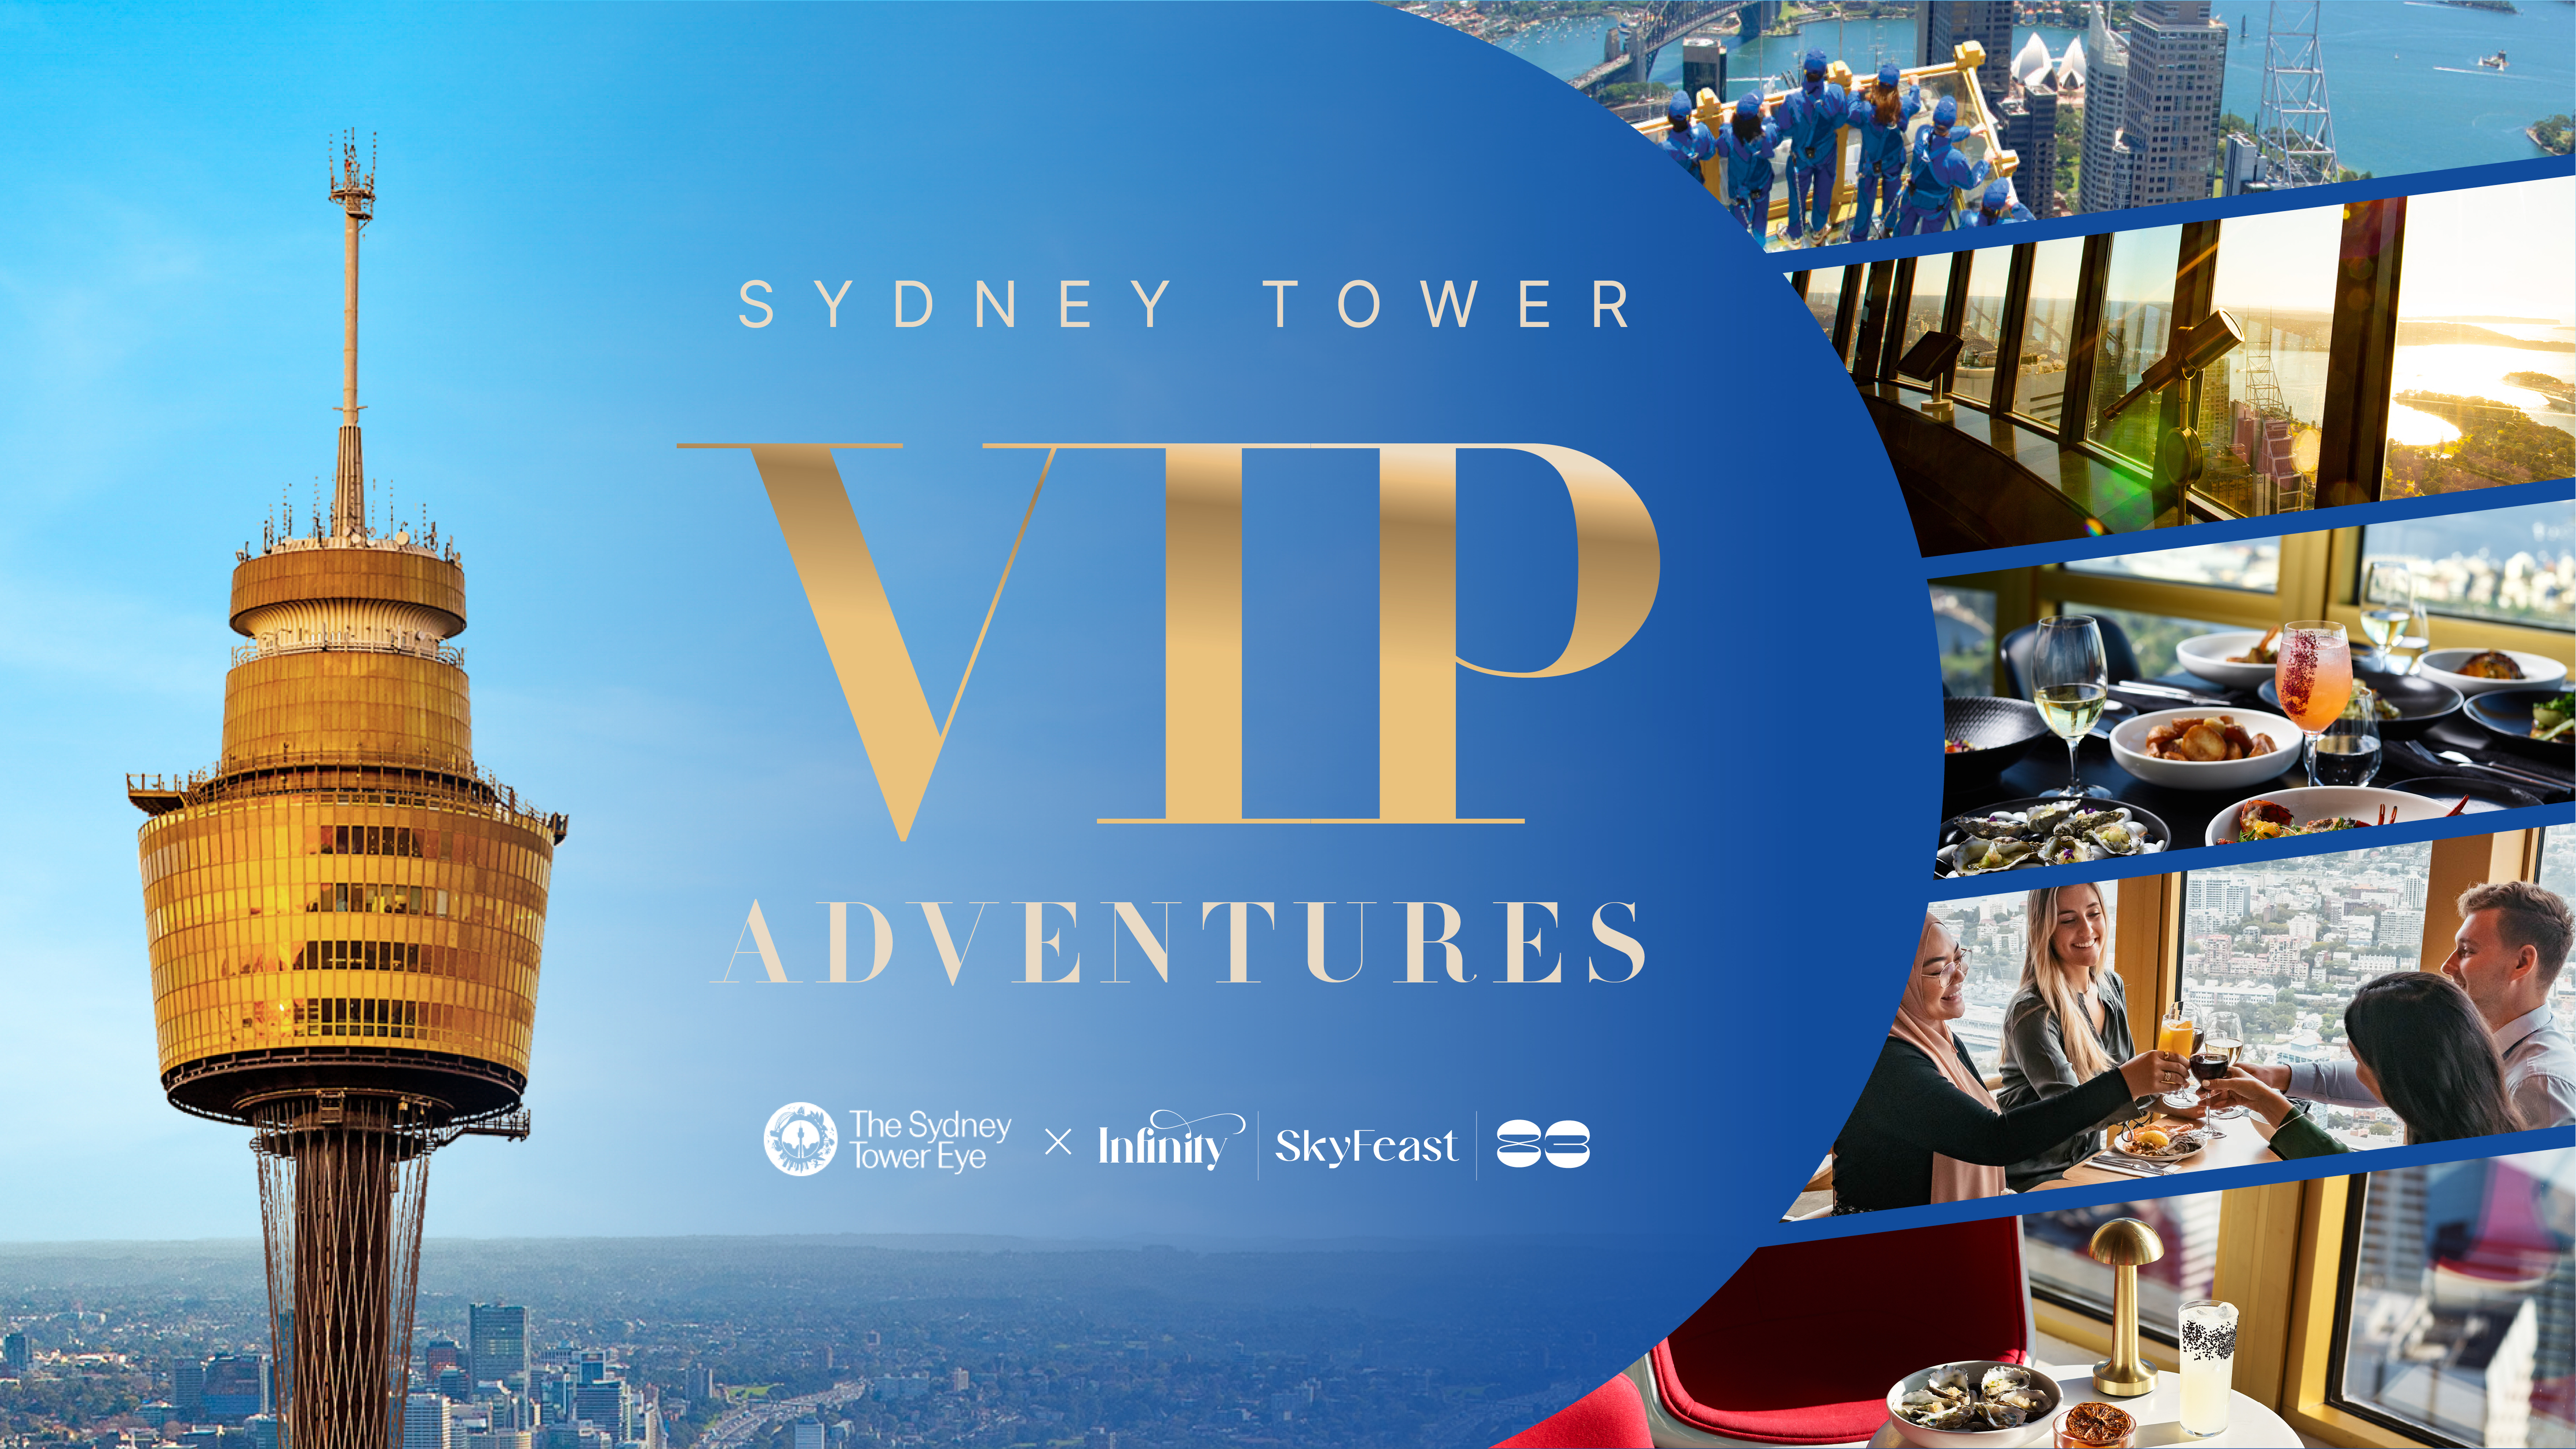 Sydney Tower VIP Adventures Banner